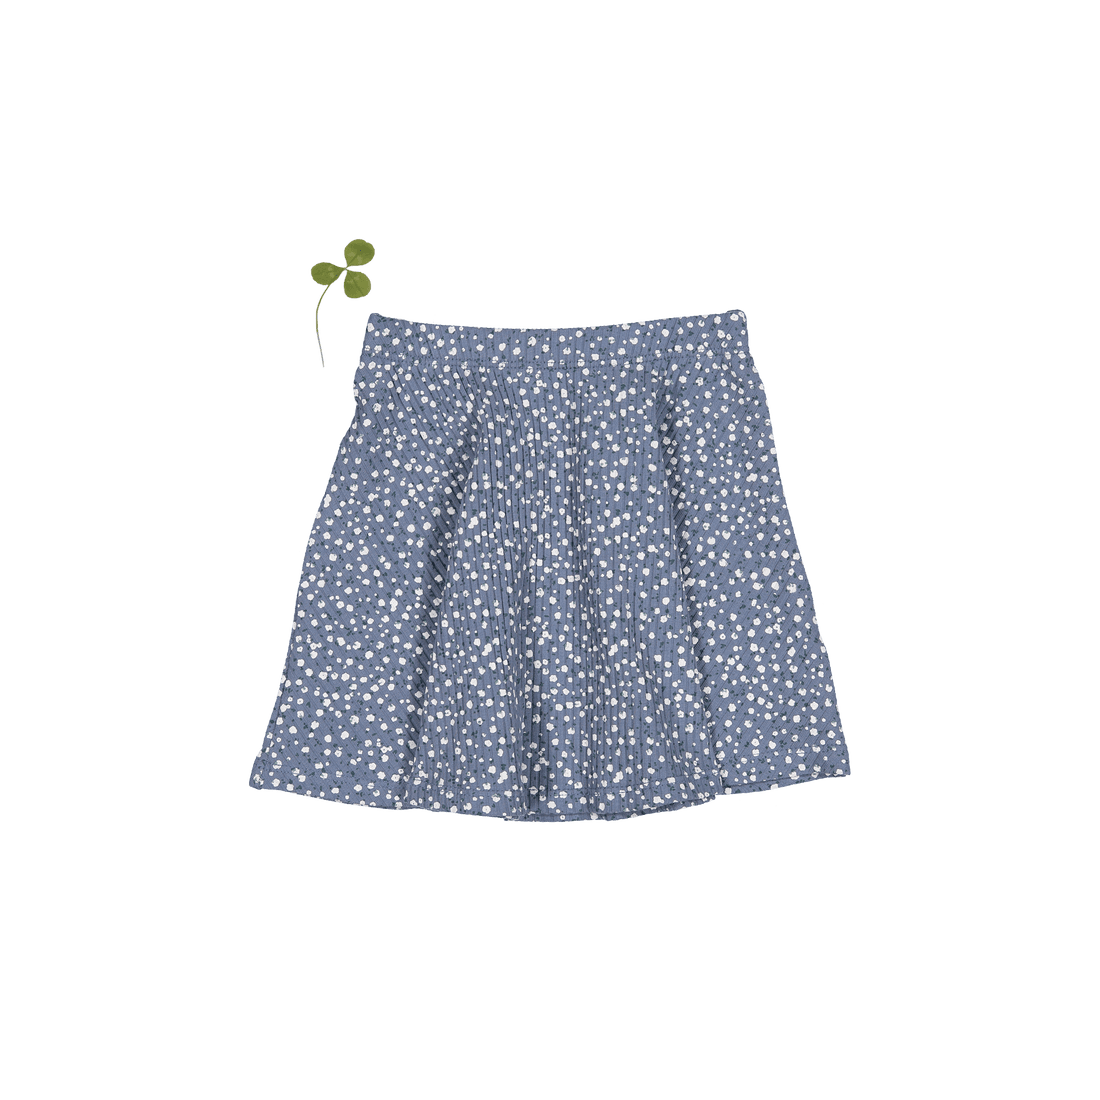 The Printed Skirt - Midnight Bud